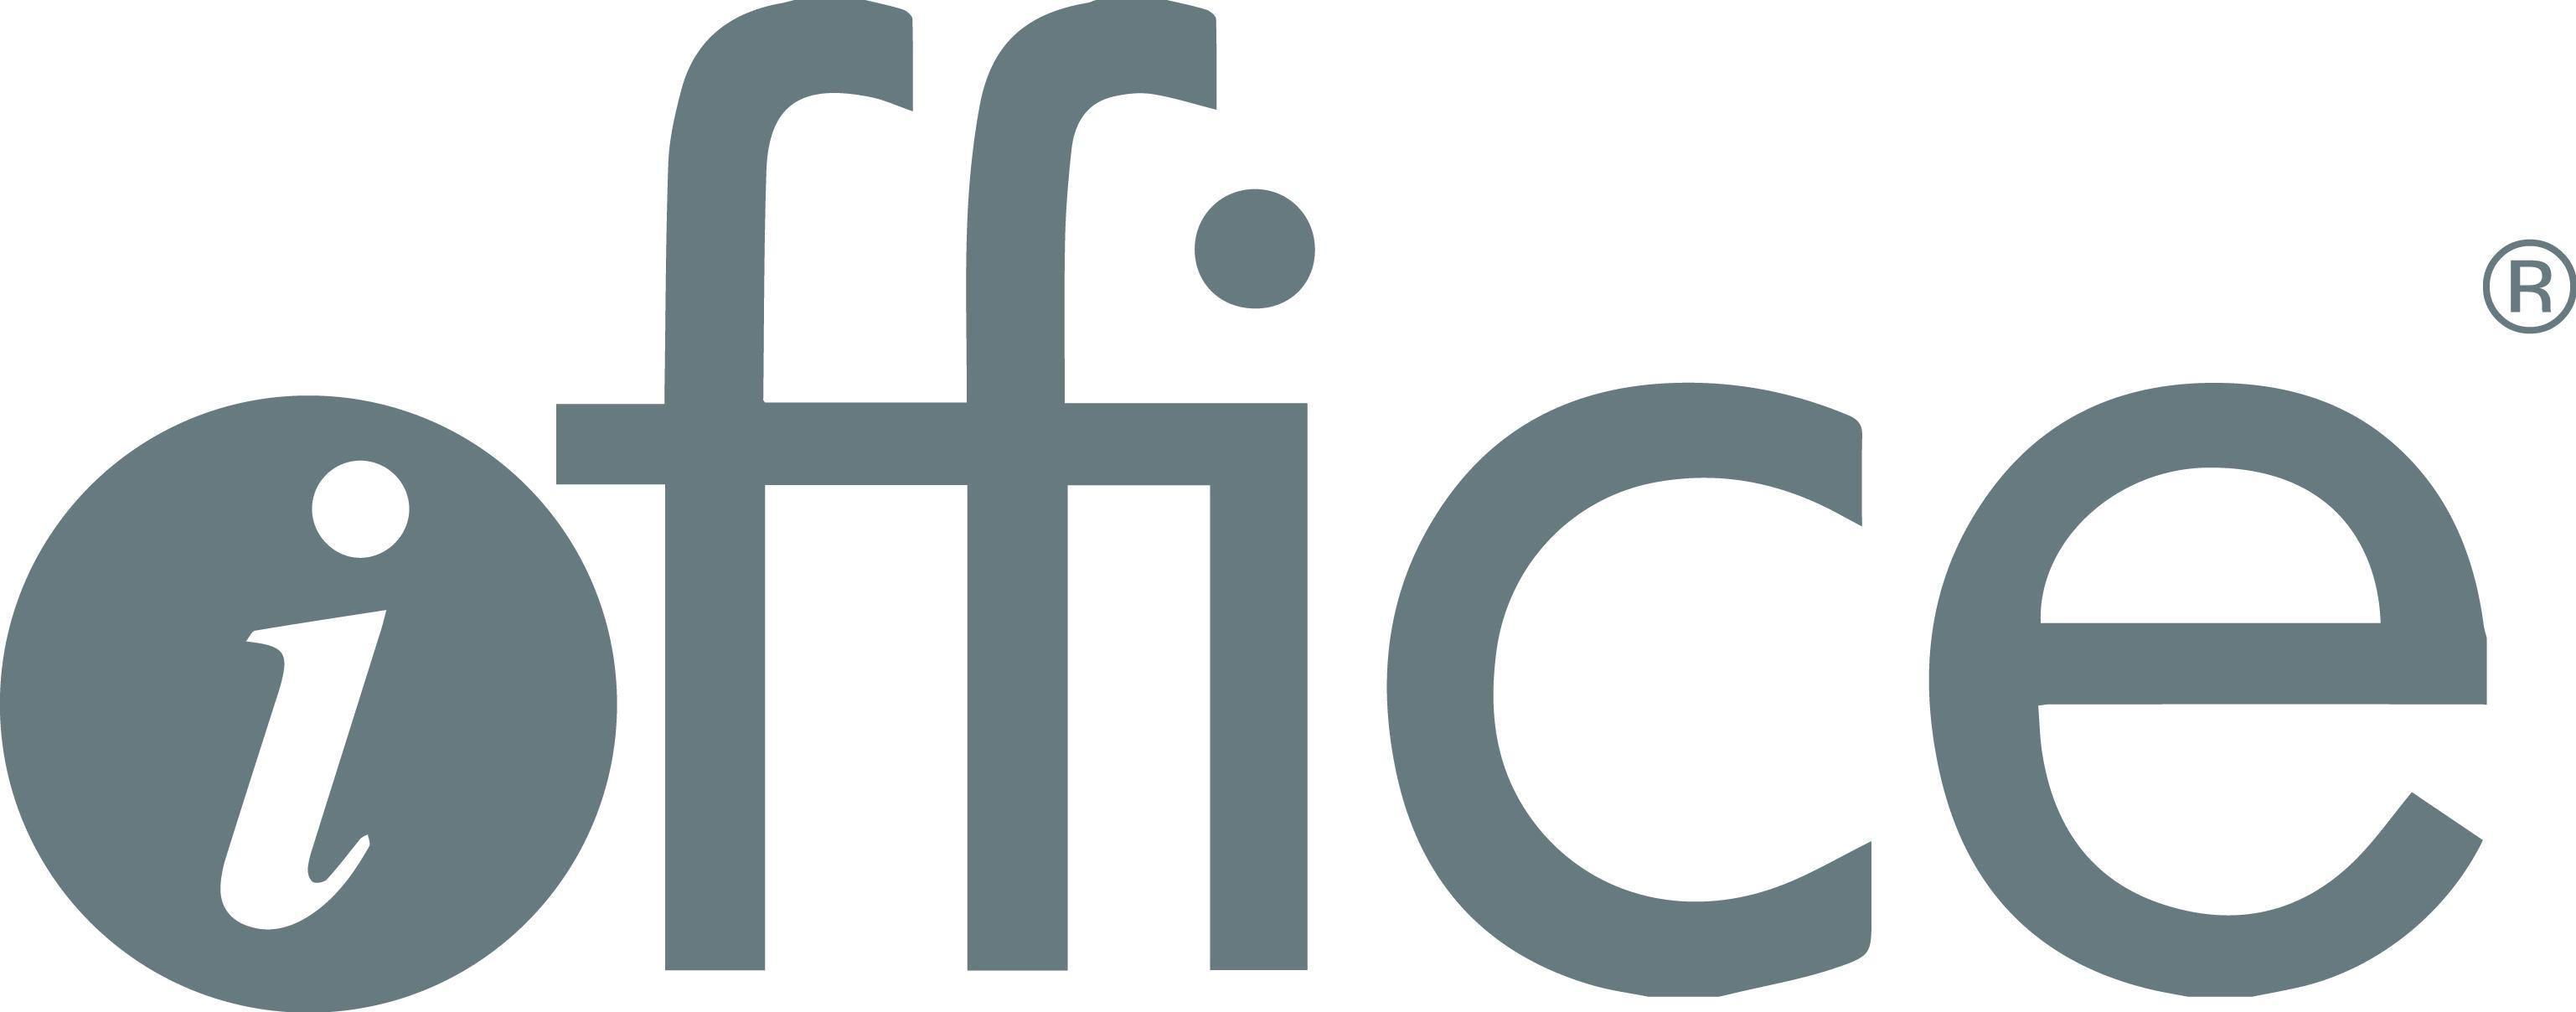 Ioffice Logo - iOFFICE Competitors, Revenue and Employees - Owler Company Profile